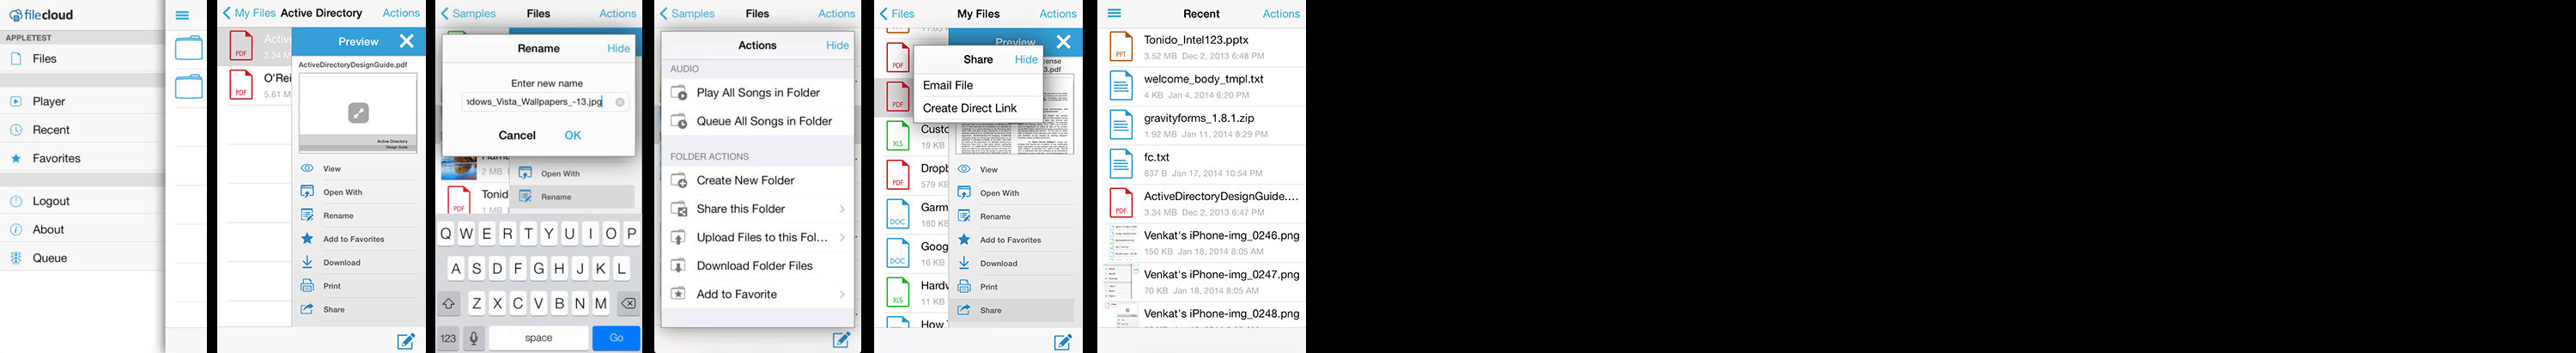 FileCloud iOS App Screens